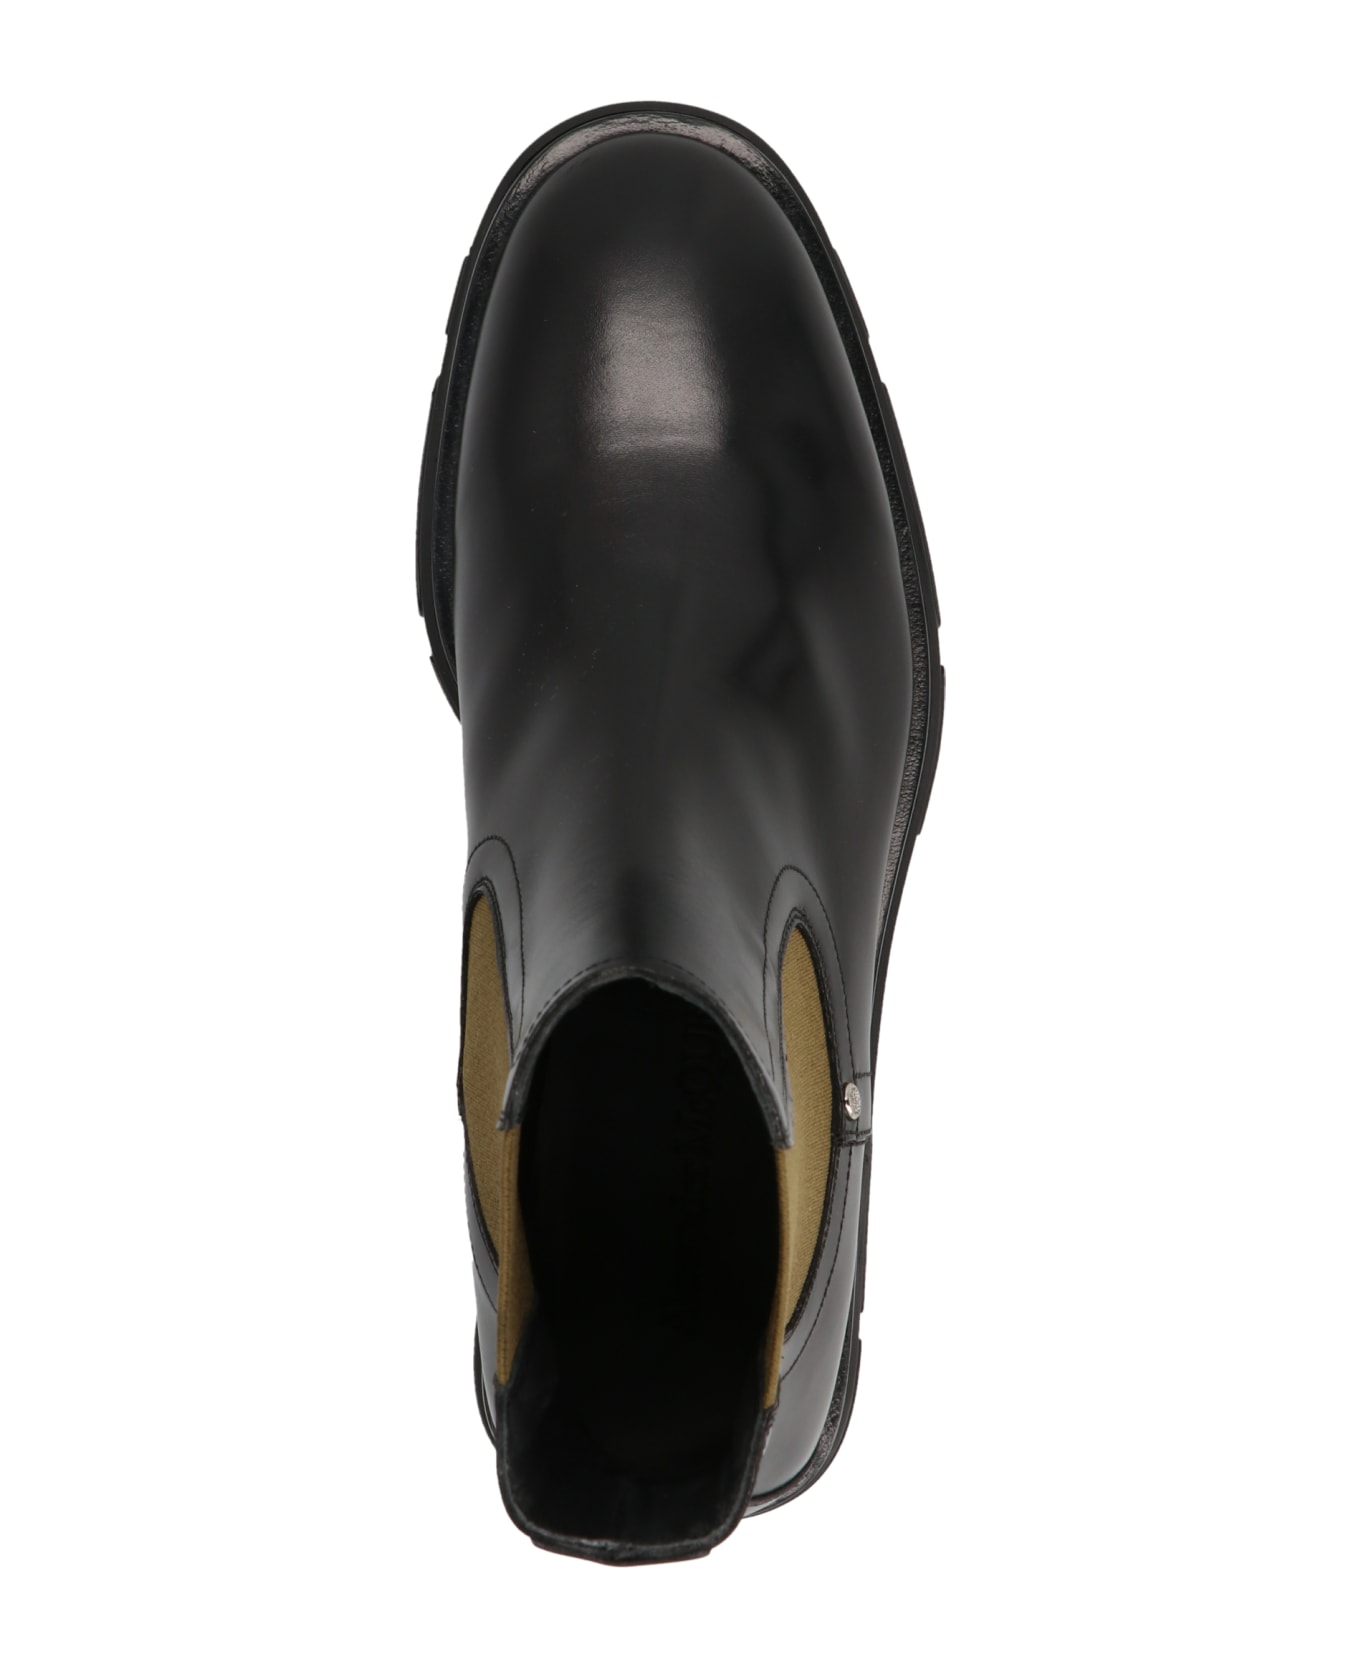 Alexander McQueen Leather Boots - Black  